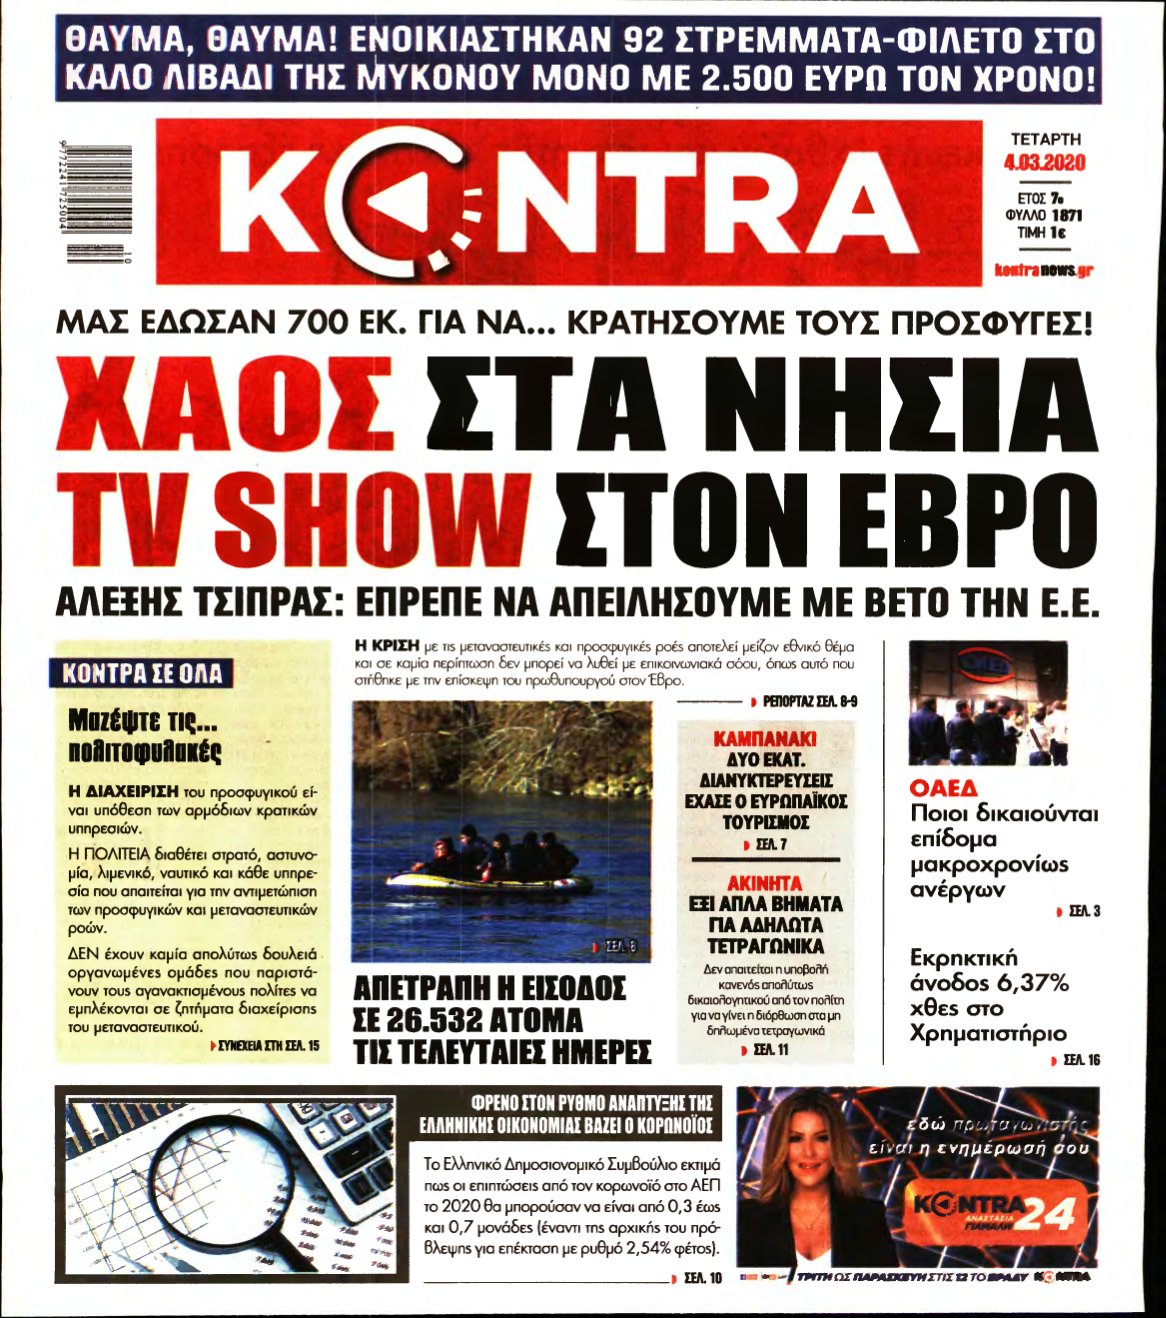 KONTRA NEWS – 04/03/2020